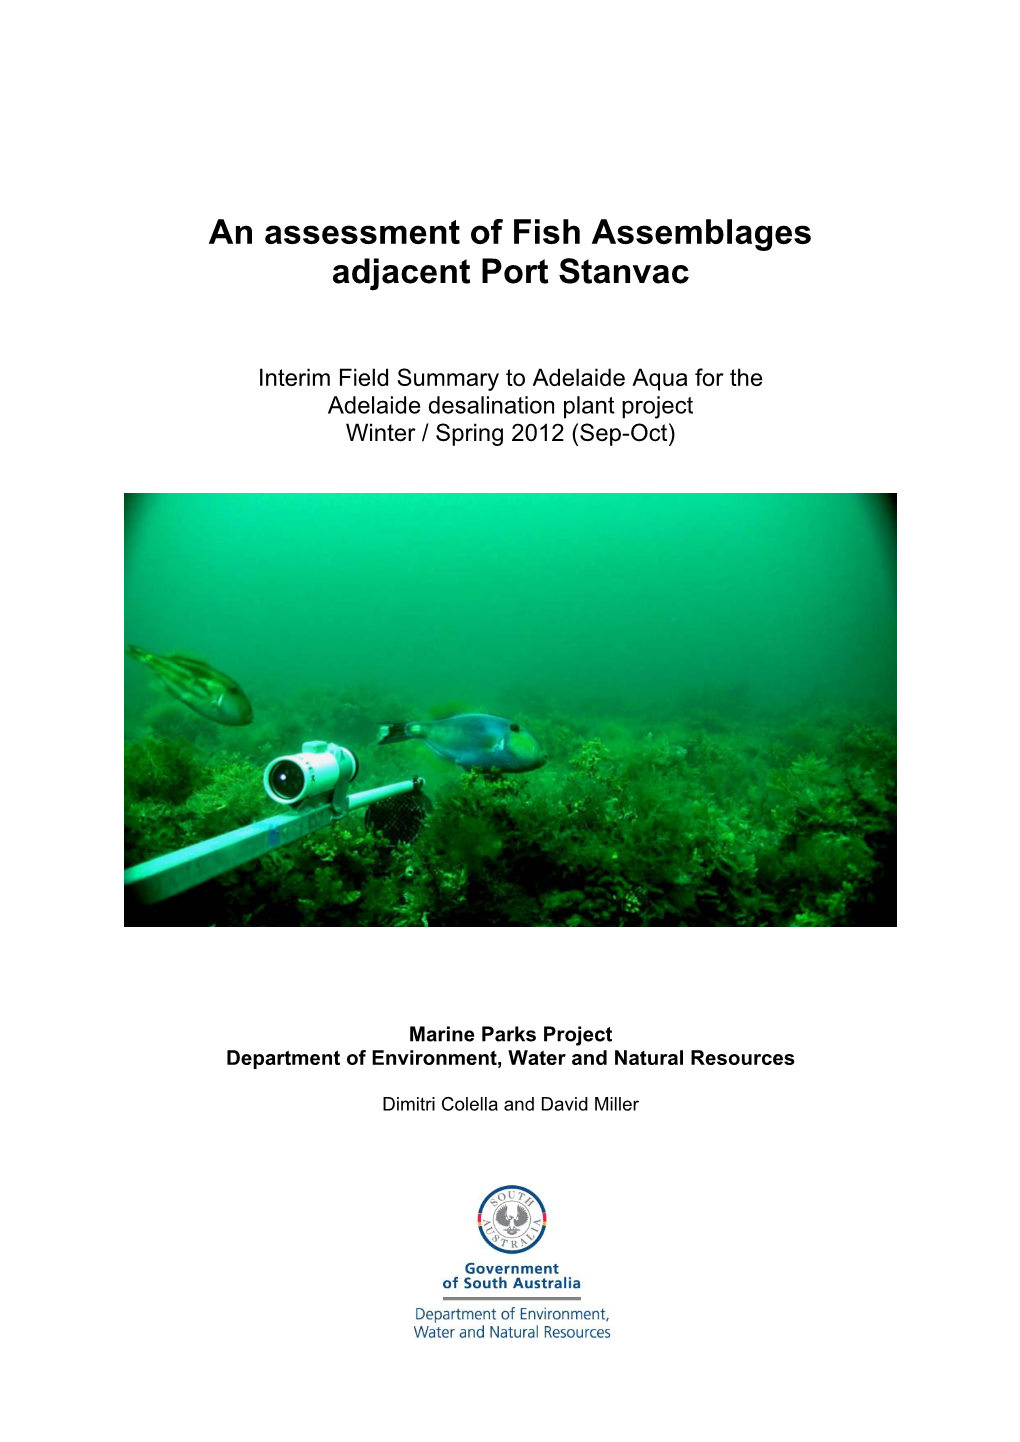 Fish Assemblage Survey Within the Port Stanvac Subtidal Marine